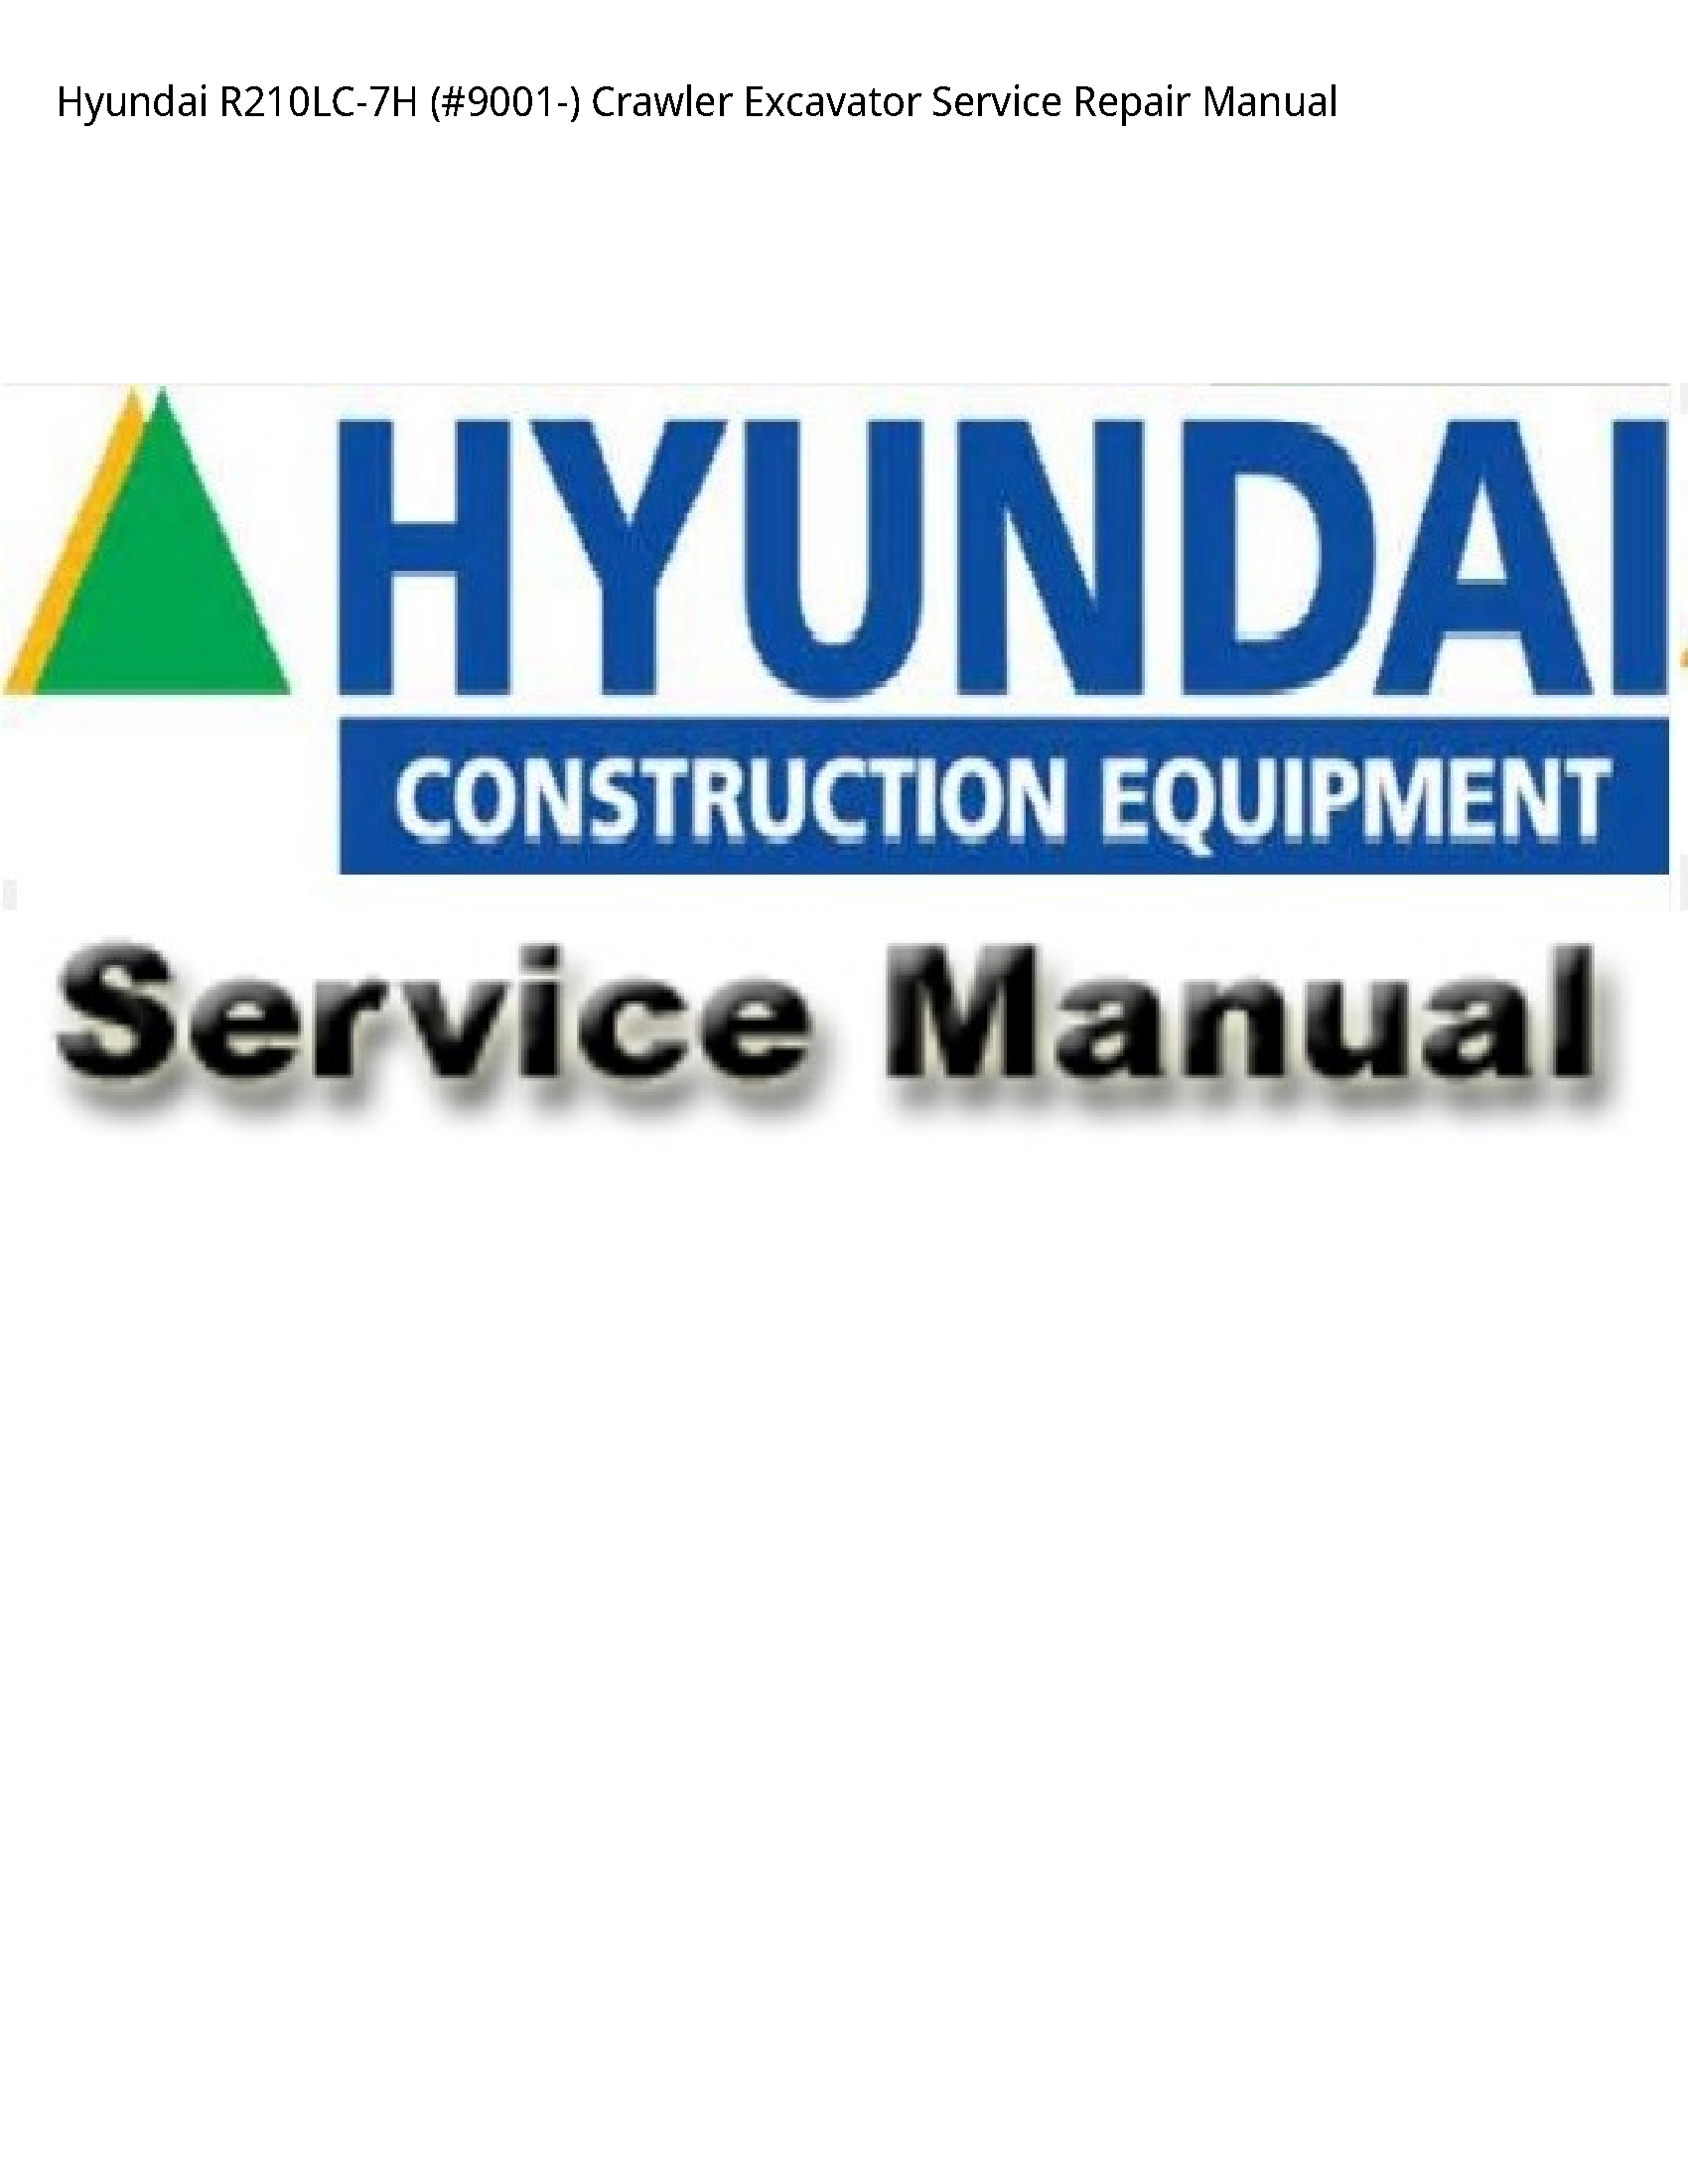 Hyundai R210LC-7H Crawler Excavator manual